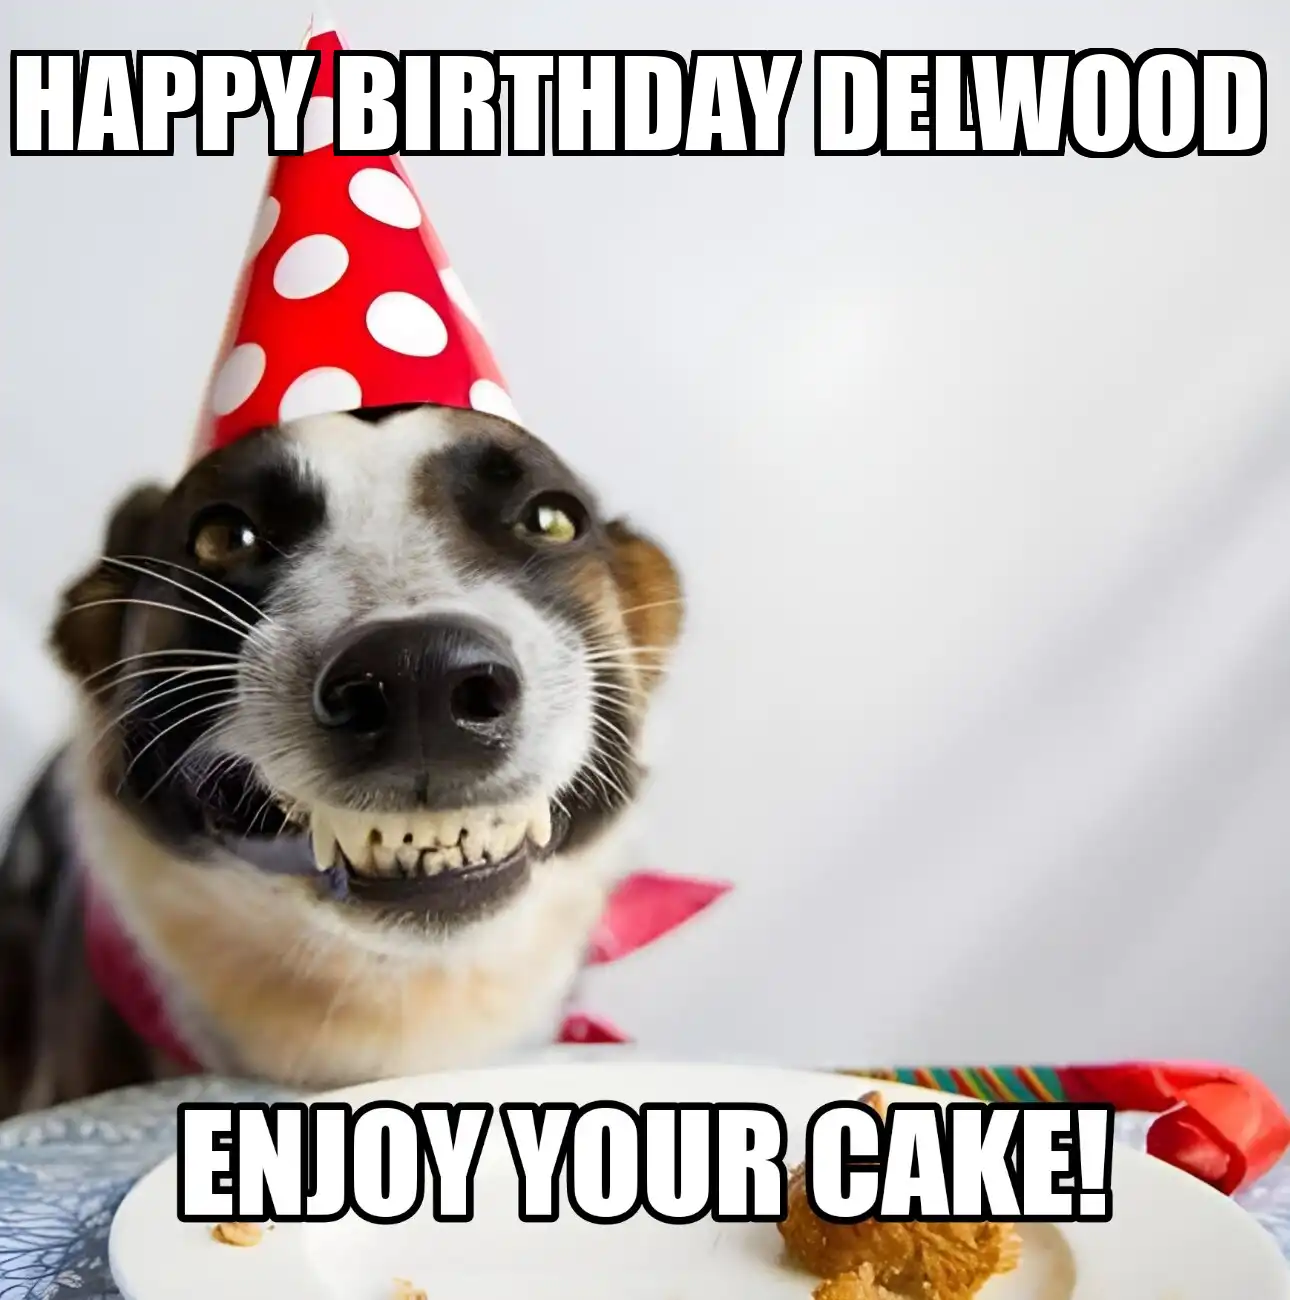 Happy Birthday Delwood Enjoy Your Cake Dog Meme